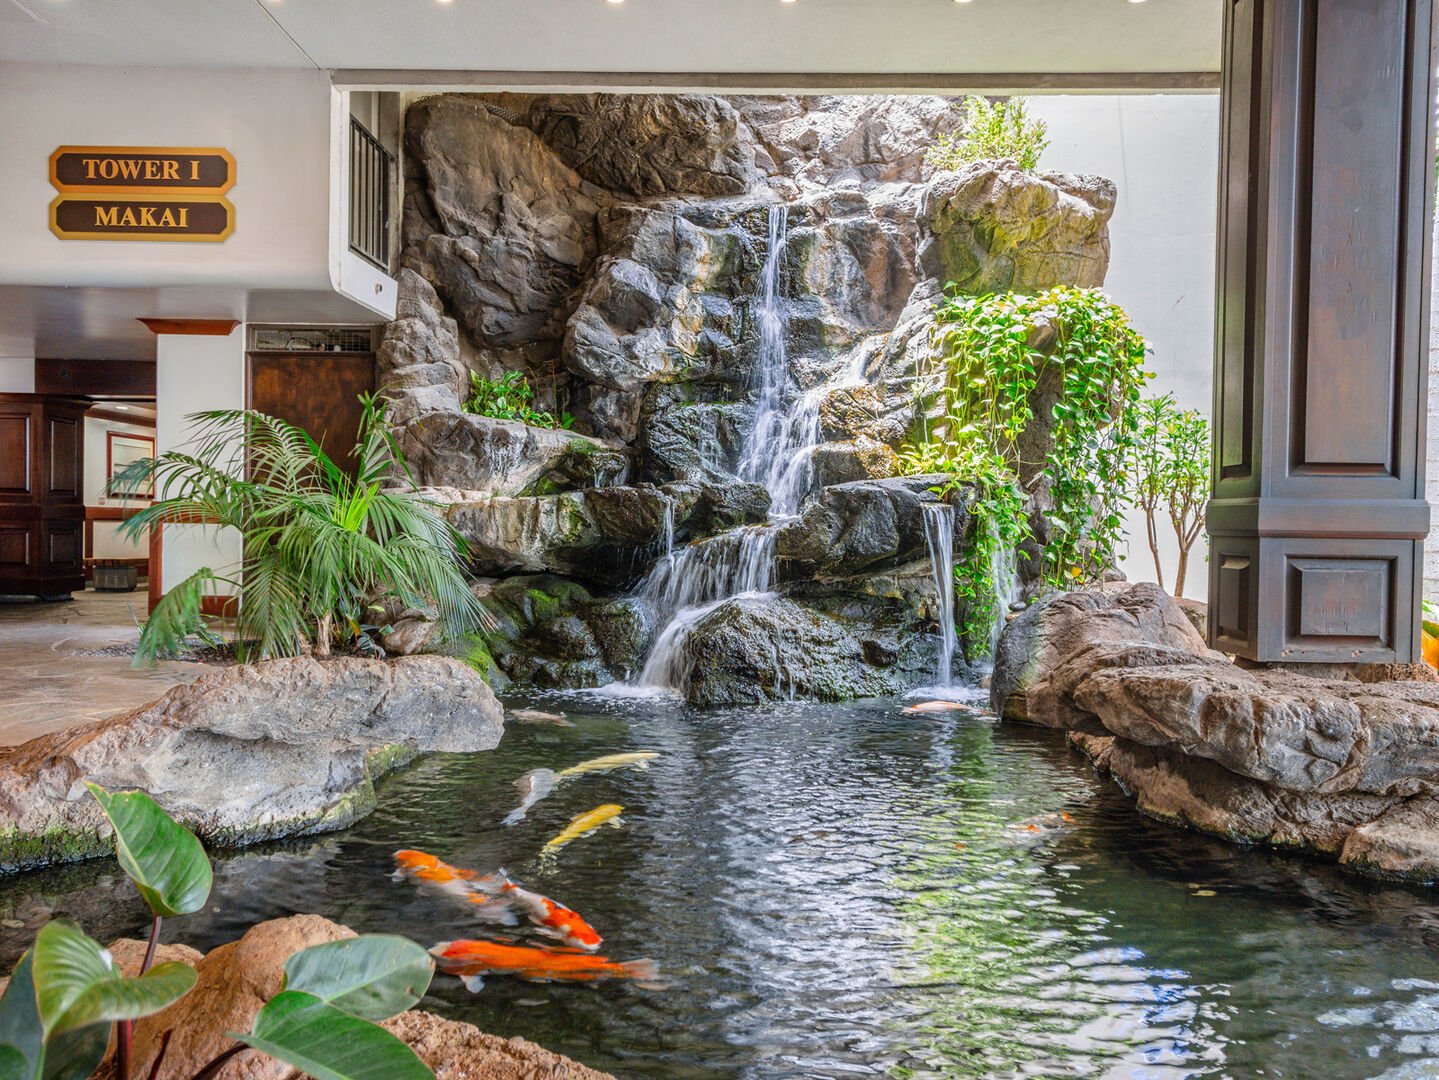 Lobby koi pond and waterfall